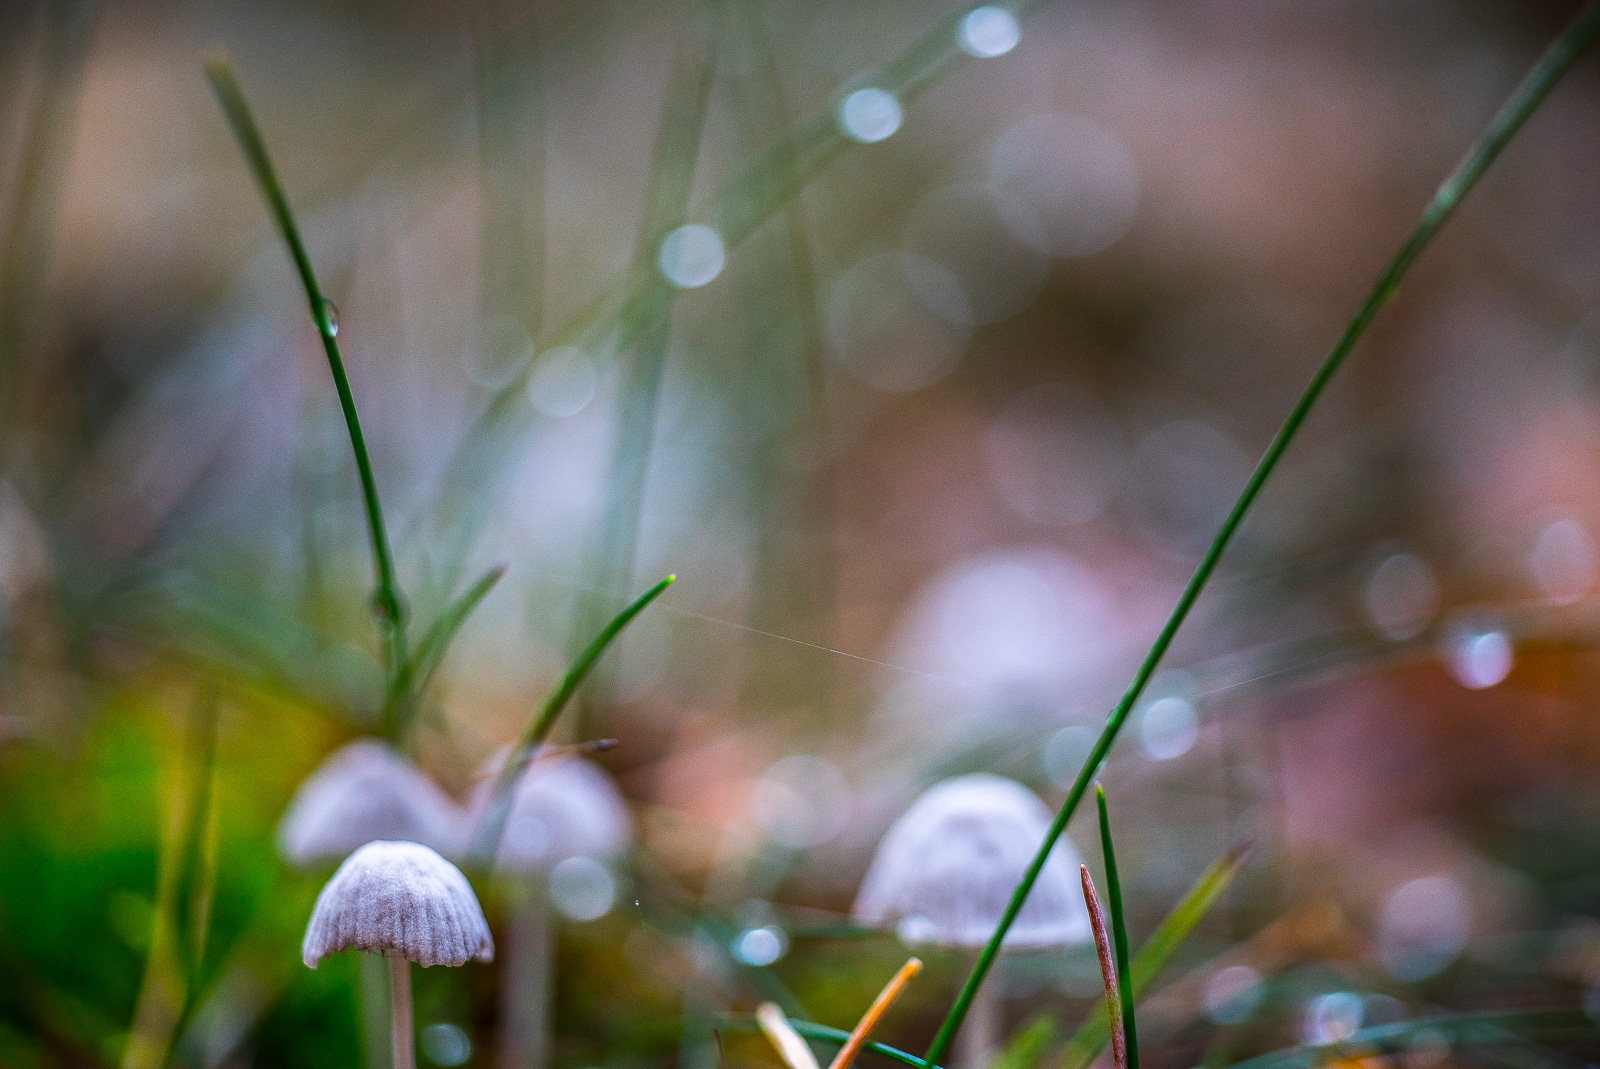 kleiner blasslila Pilz im Gras